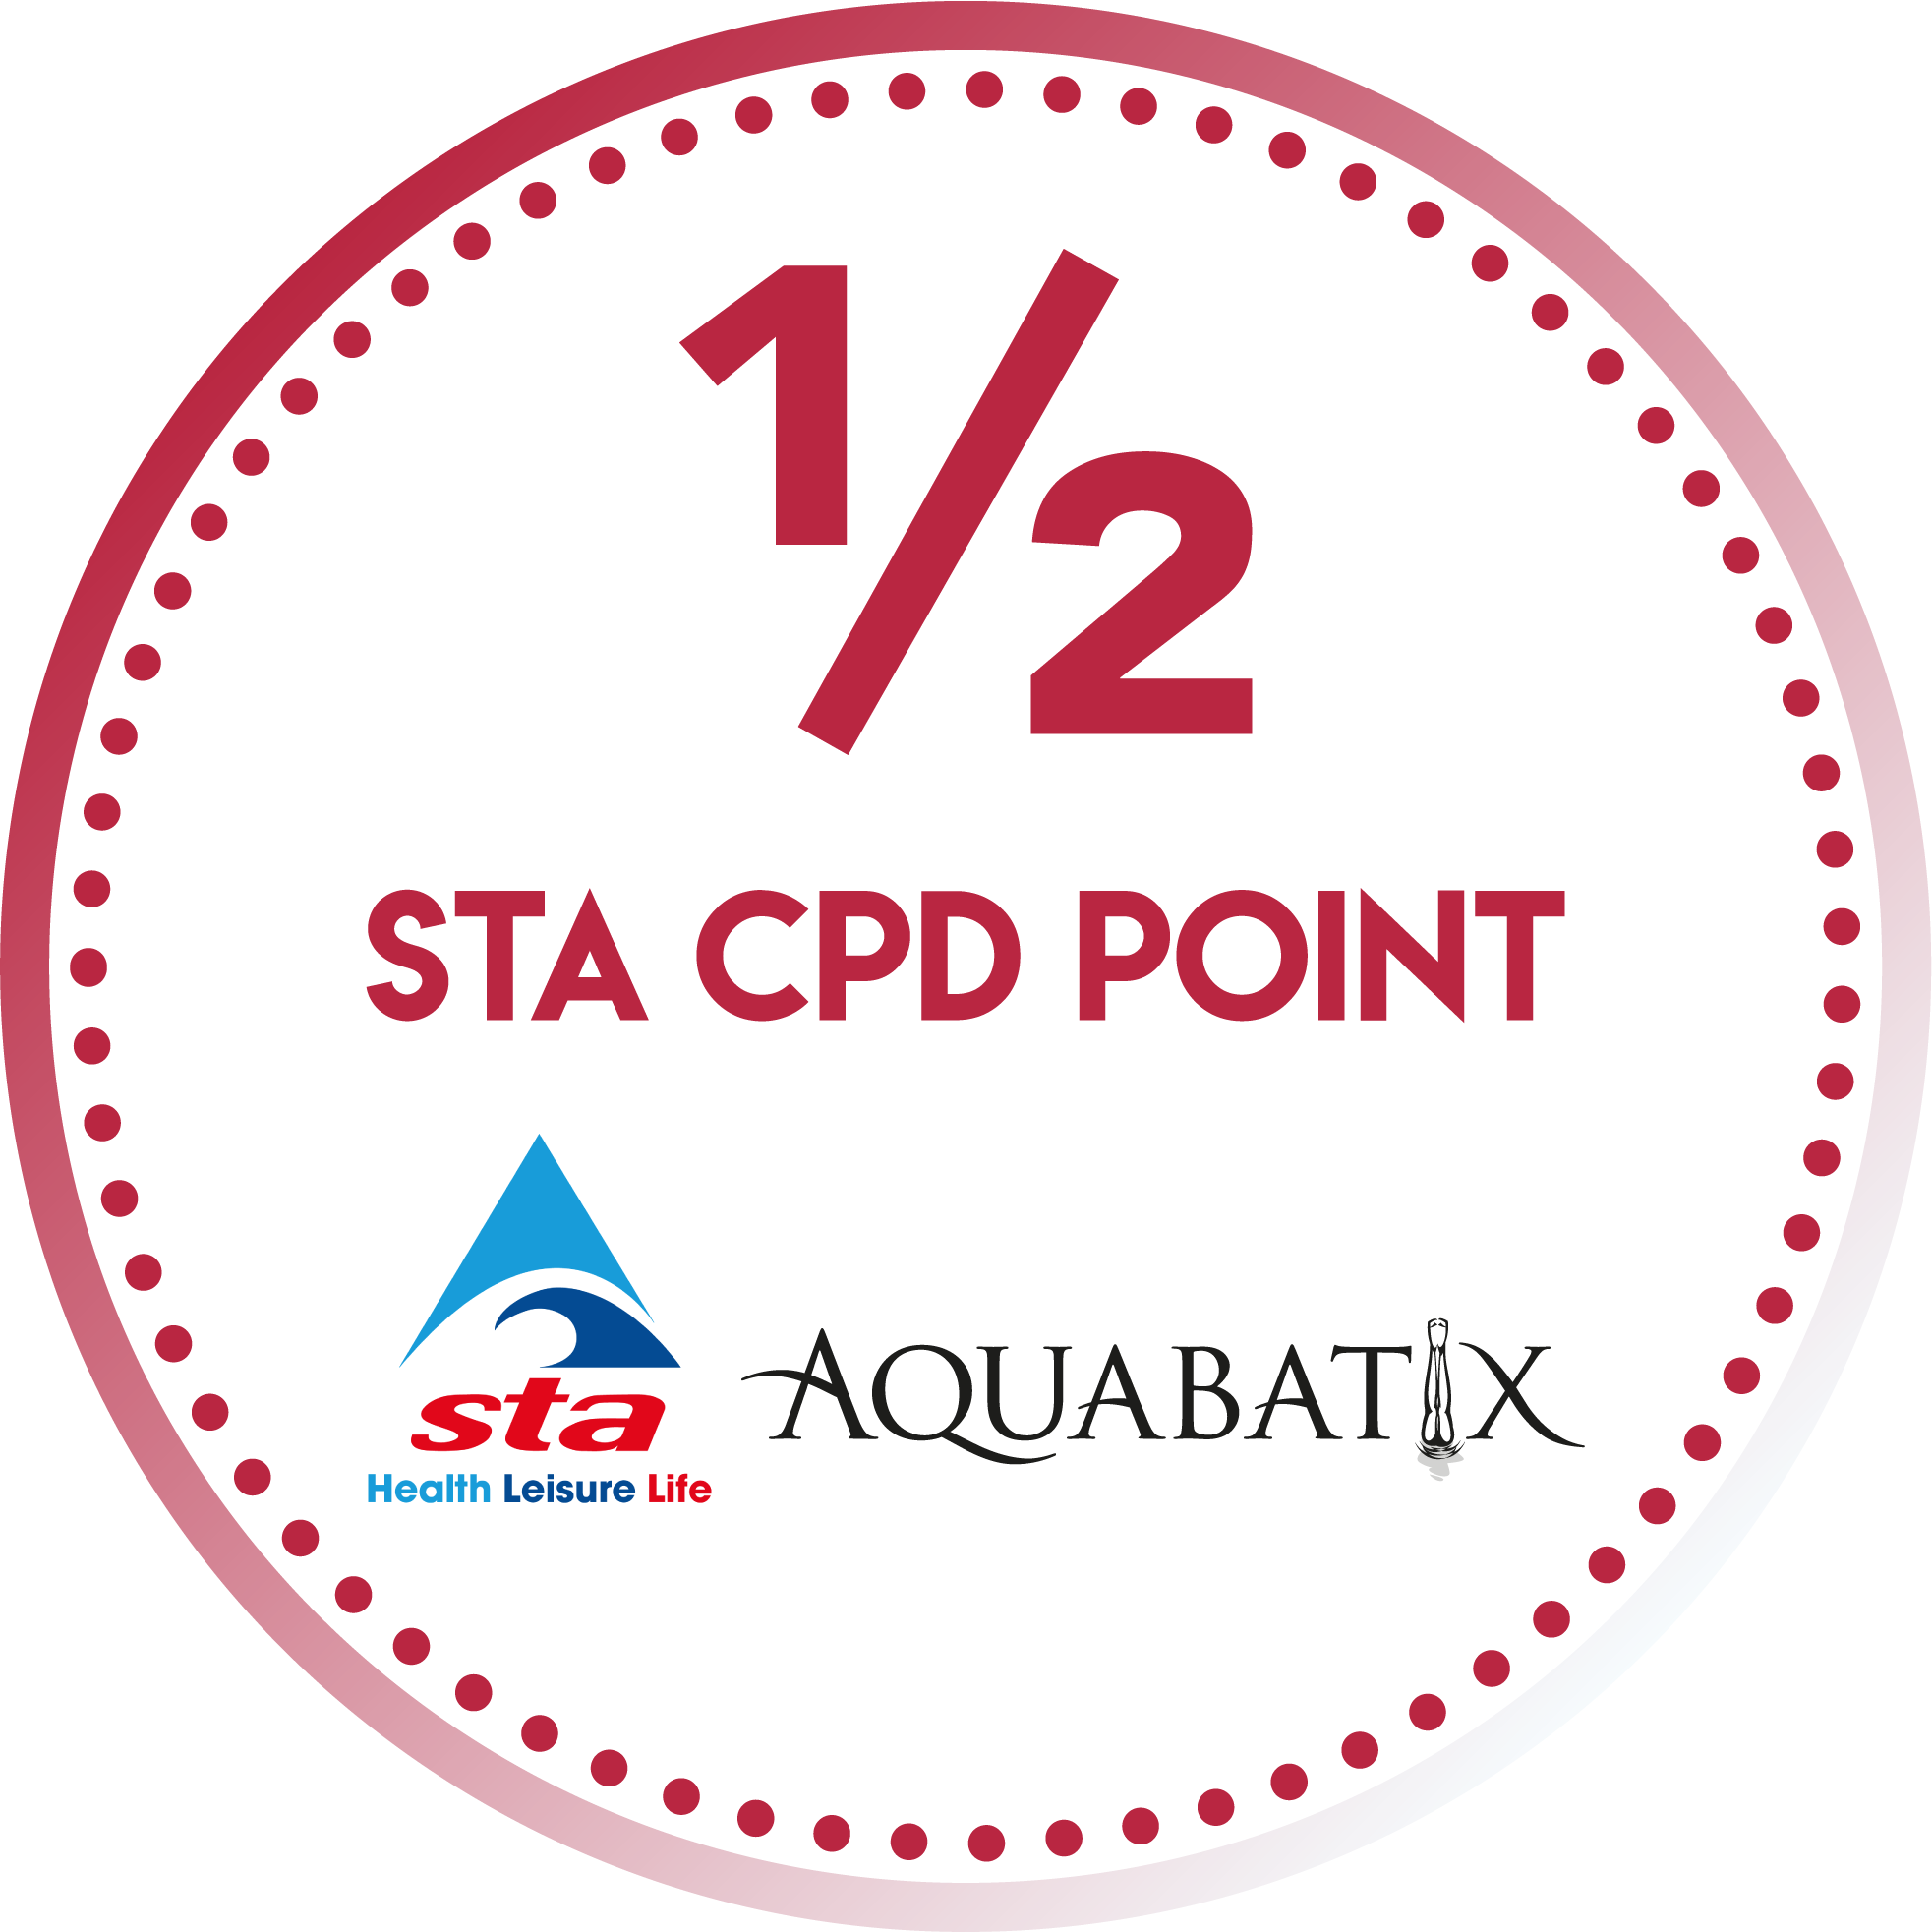 1 Developmental CIMSPA CPD Point